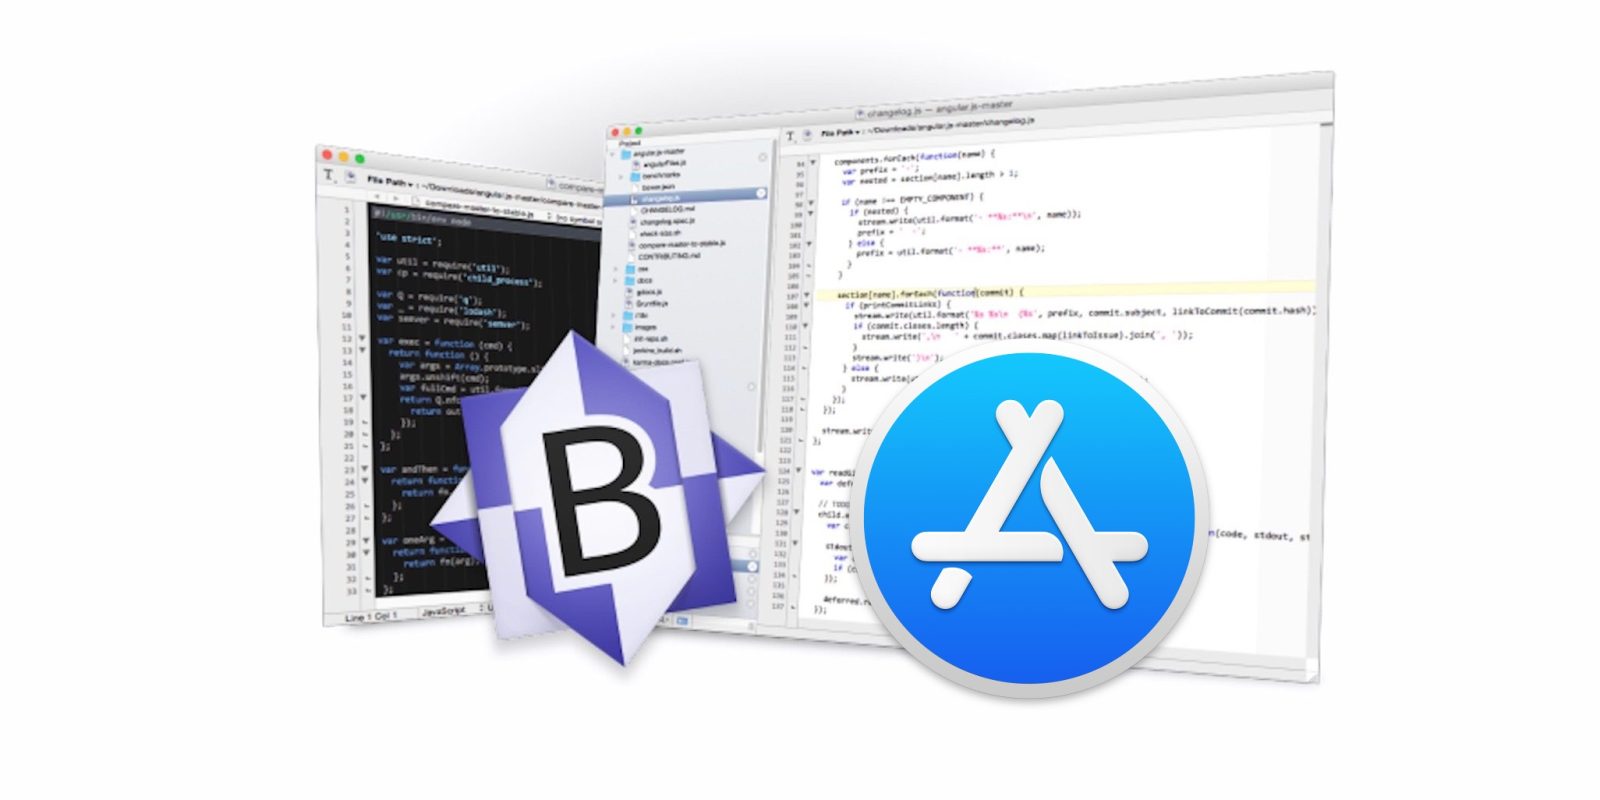 bbedit mac app store